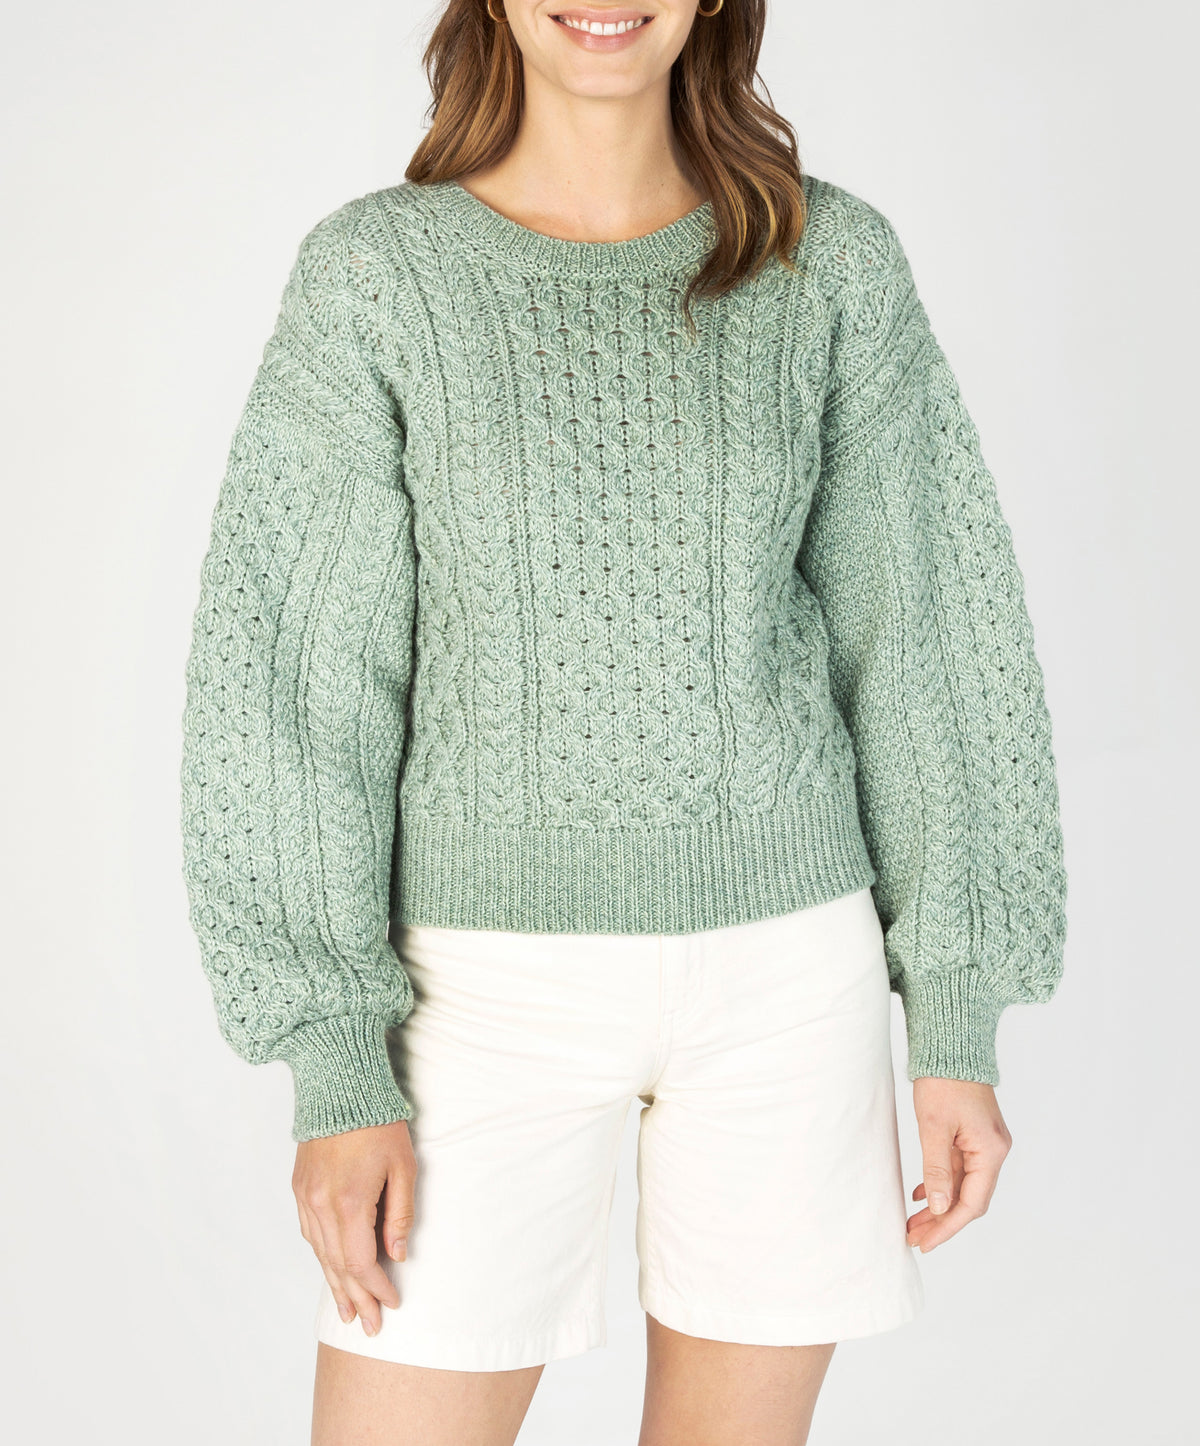 Blasket Honeycomb Stitch Womens Aran Sweater Natural